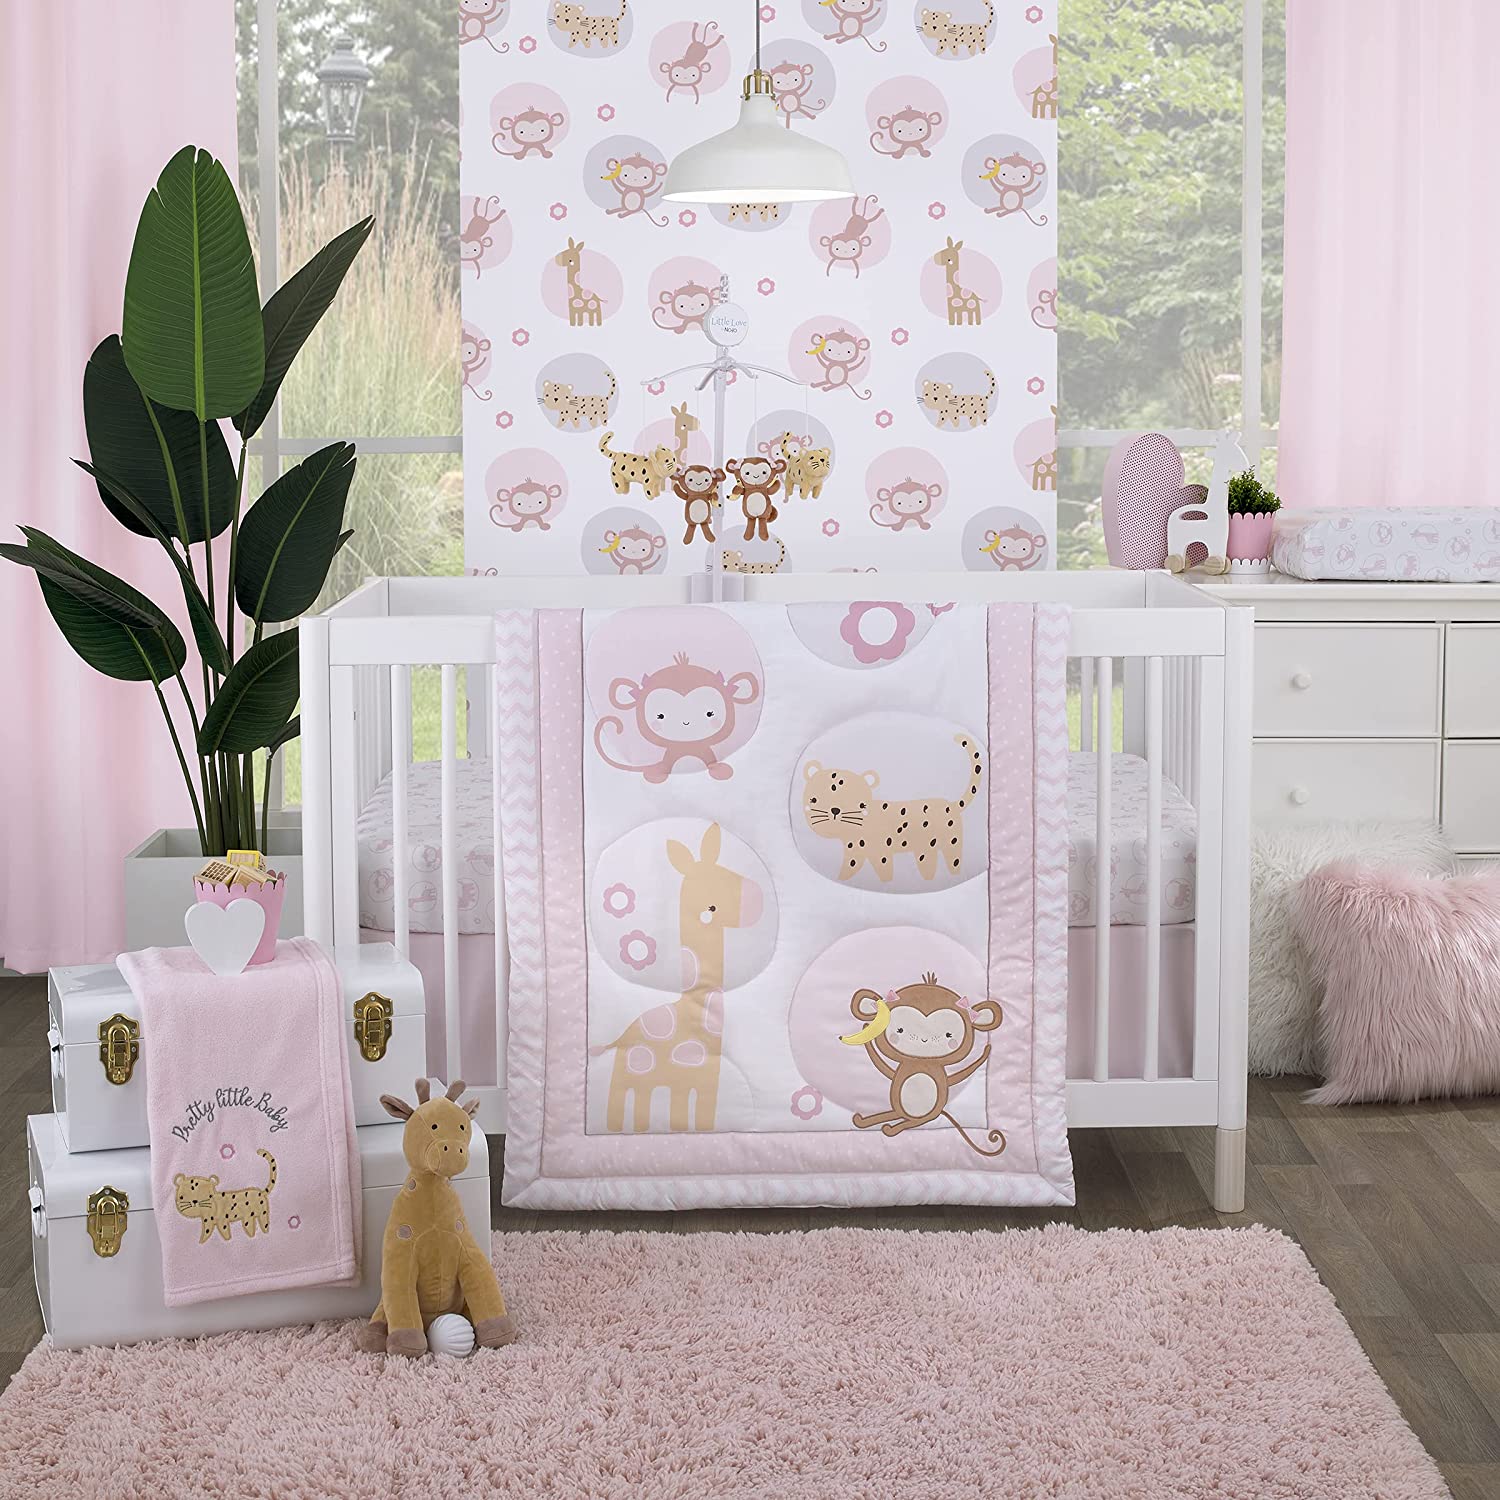 NoJo Sweet Jungle Friends Pink, White & Tan, Monkey, Cheetah & Giraffe with Polka Dots & Flowers 3Piece Nursery Crib Bedding Set - Comforter, Fitted Crib Sheet, & Crib Skirt, Pink, White, Tan